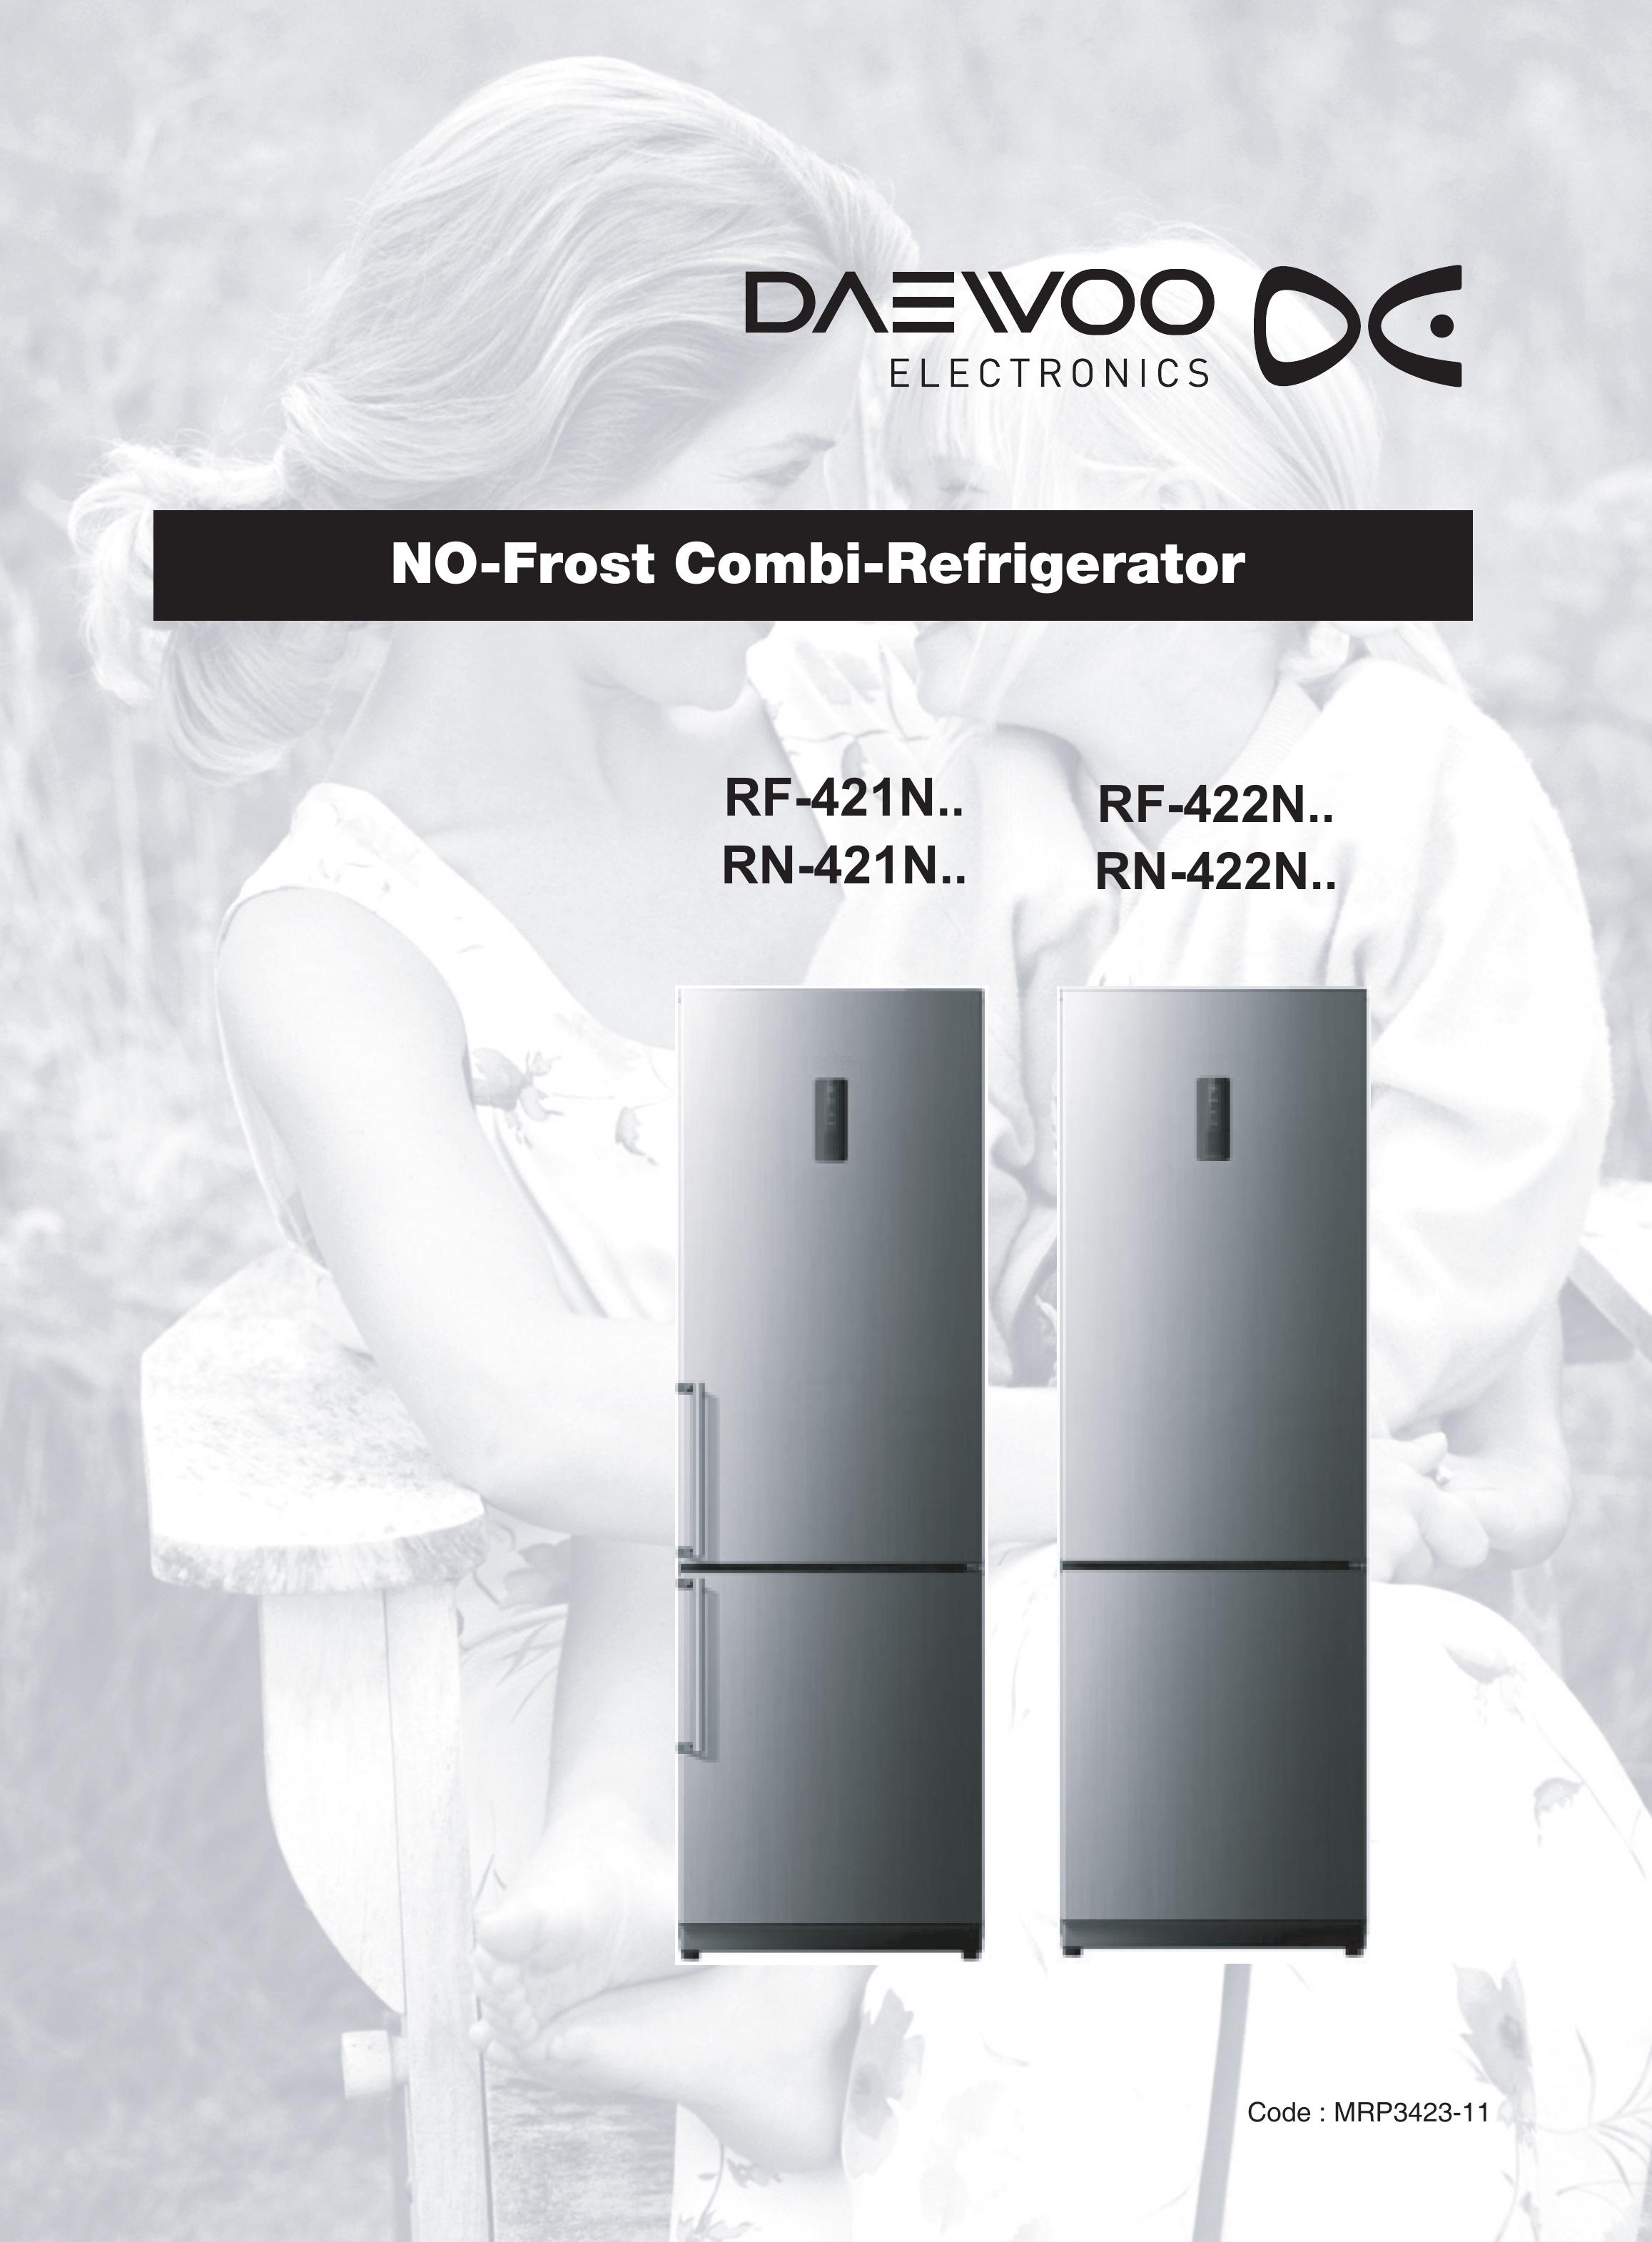 Daewoo RN-422N.. Refrigerator User Manual